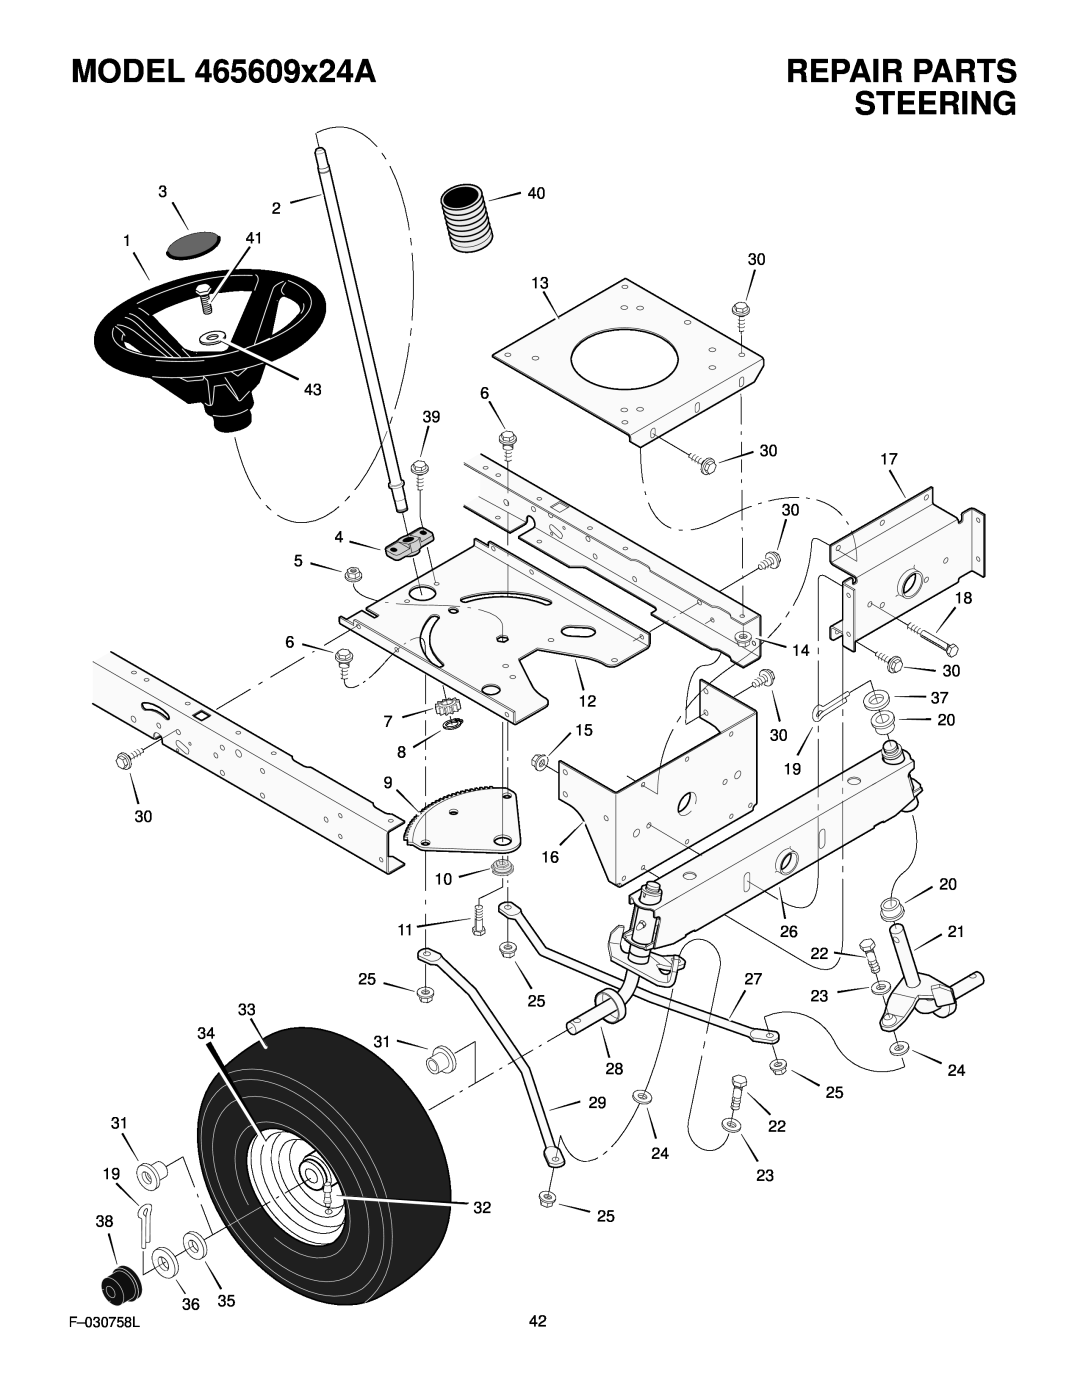 Murray manual Steering, MODEL 465609x24A, Repair Parts, F-030758L 